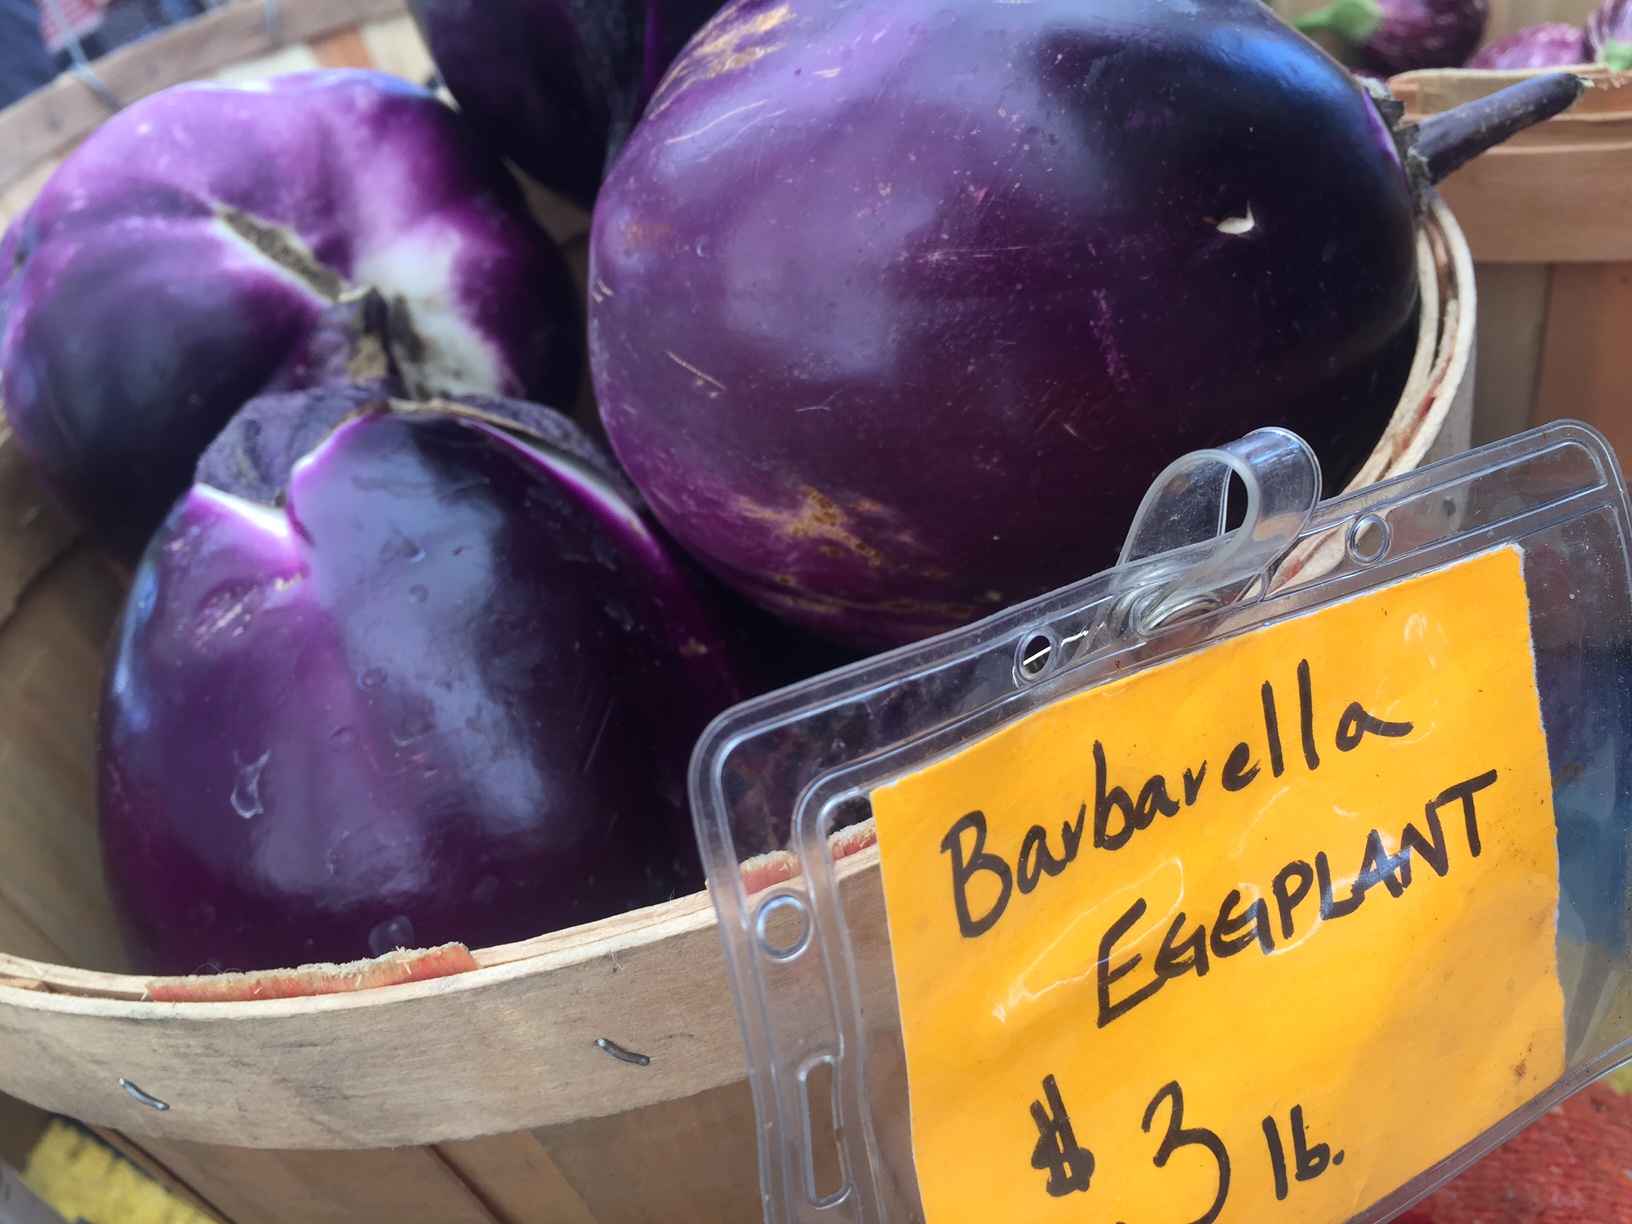 Barbarella Eggplant